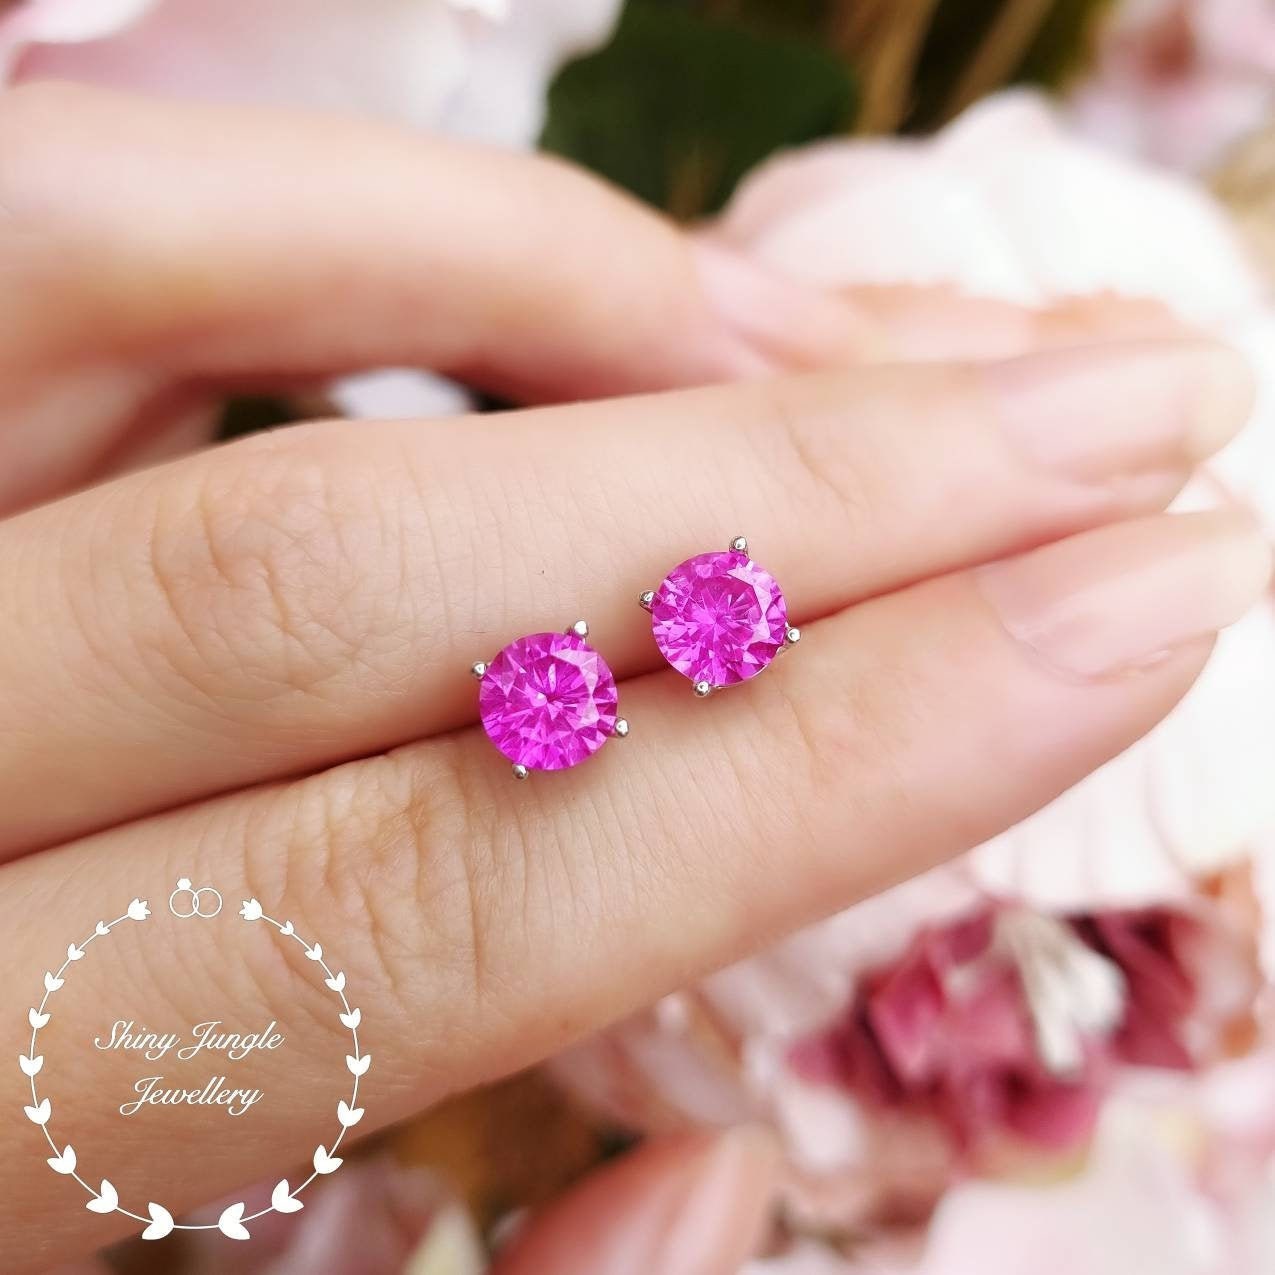 Pretty Pink Heart Cut Lab Created Sapphire Gemstones - Fabulous